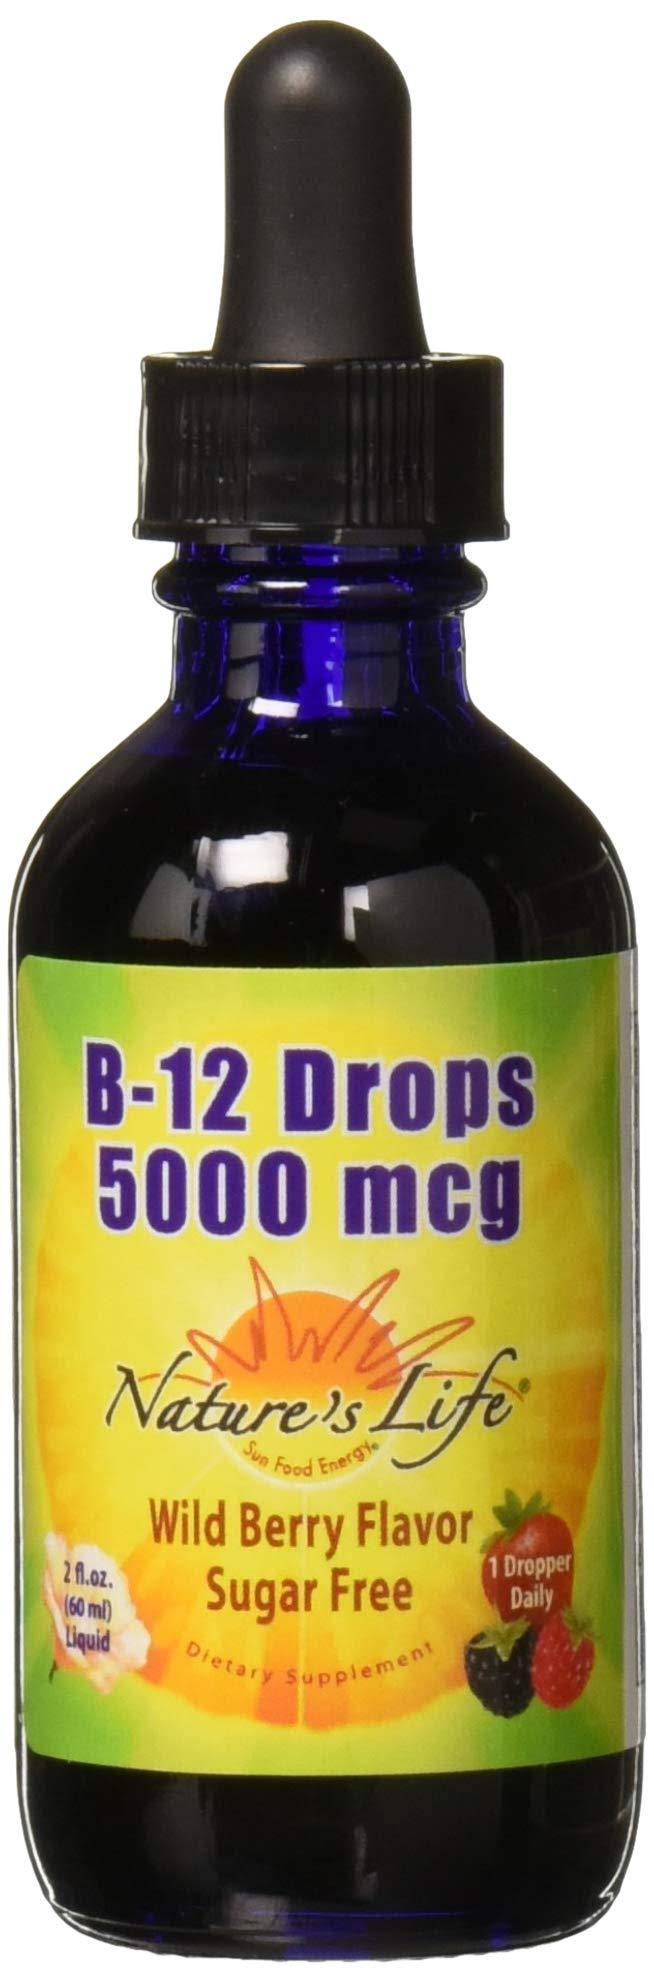 Nature's Life Sugar B-12 Drops - 5000 mcg, Wild Berry, 2oz